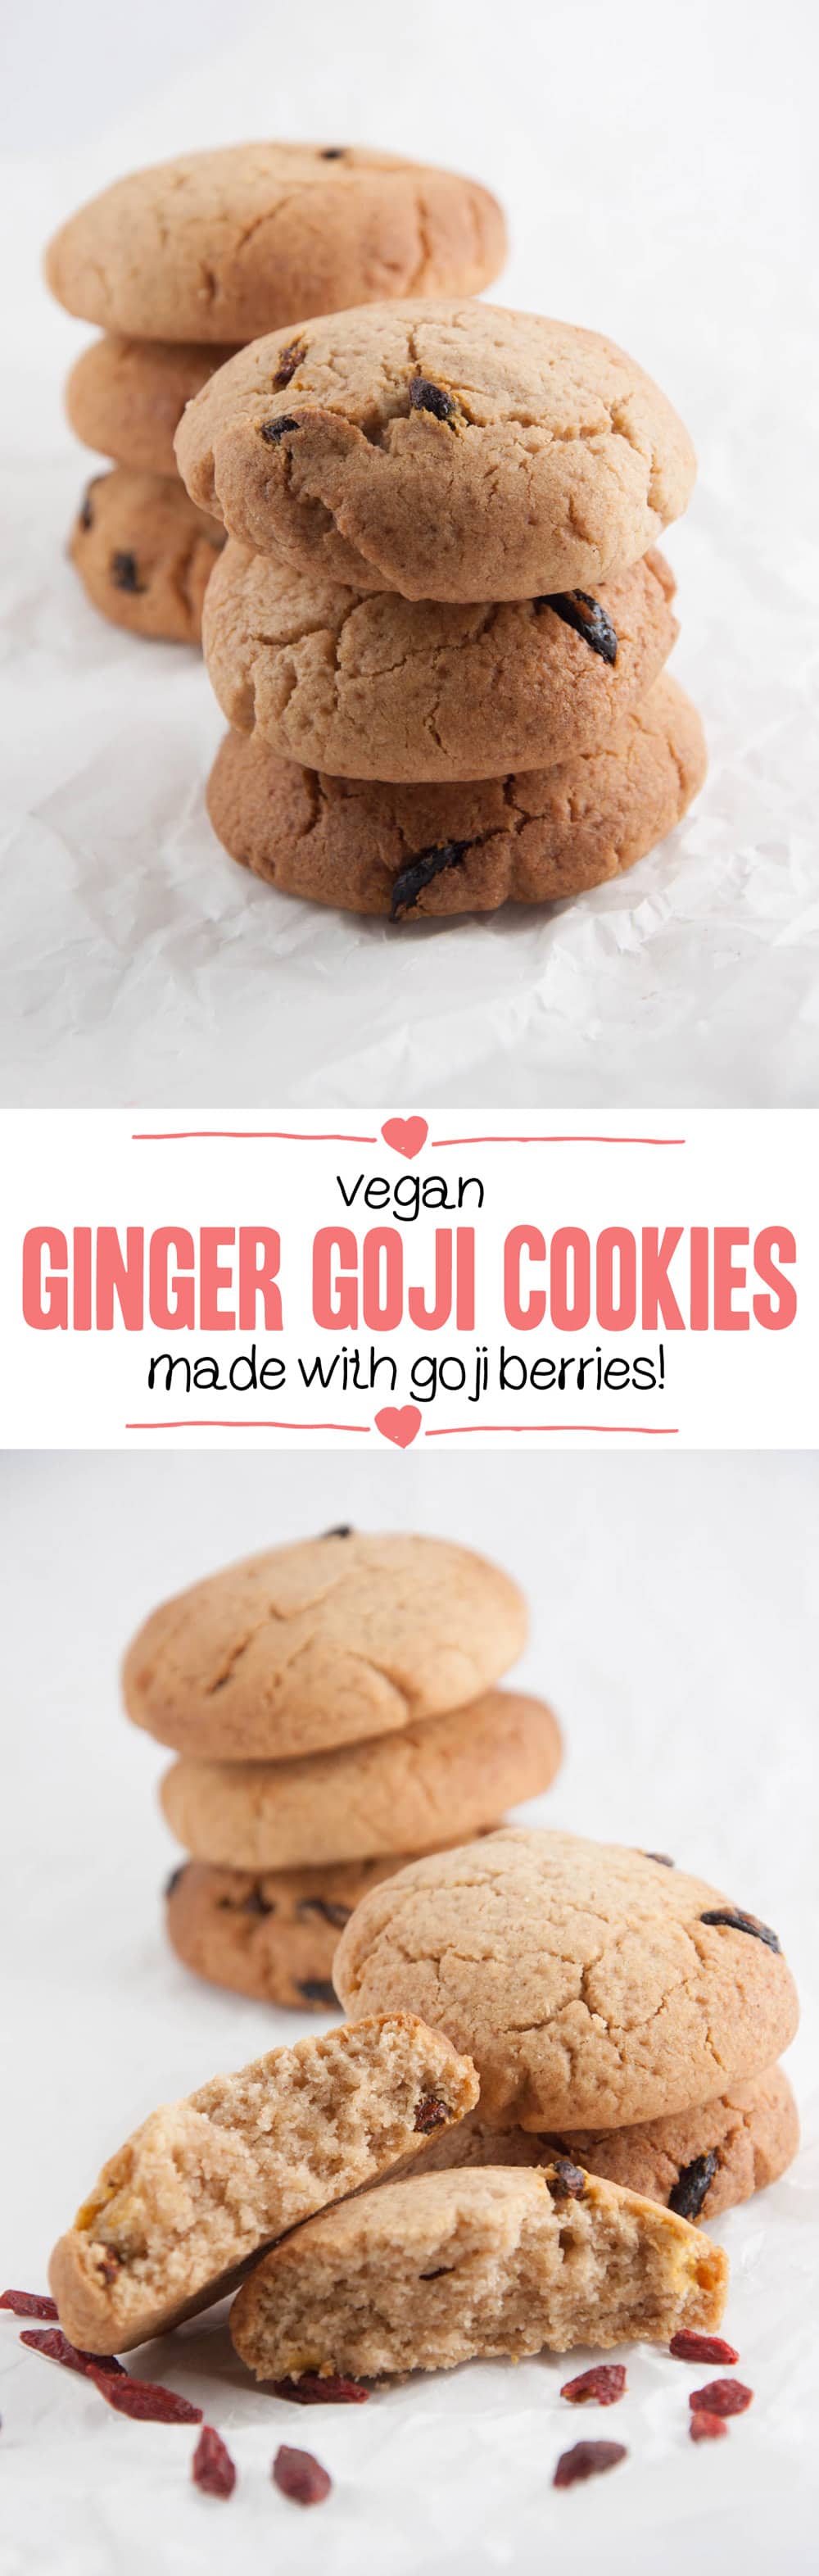 Ginger Goji Cookies | ElephantasticVegan.com